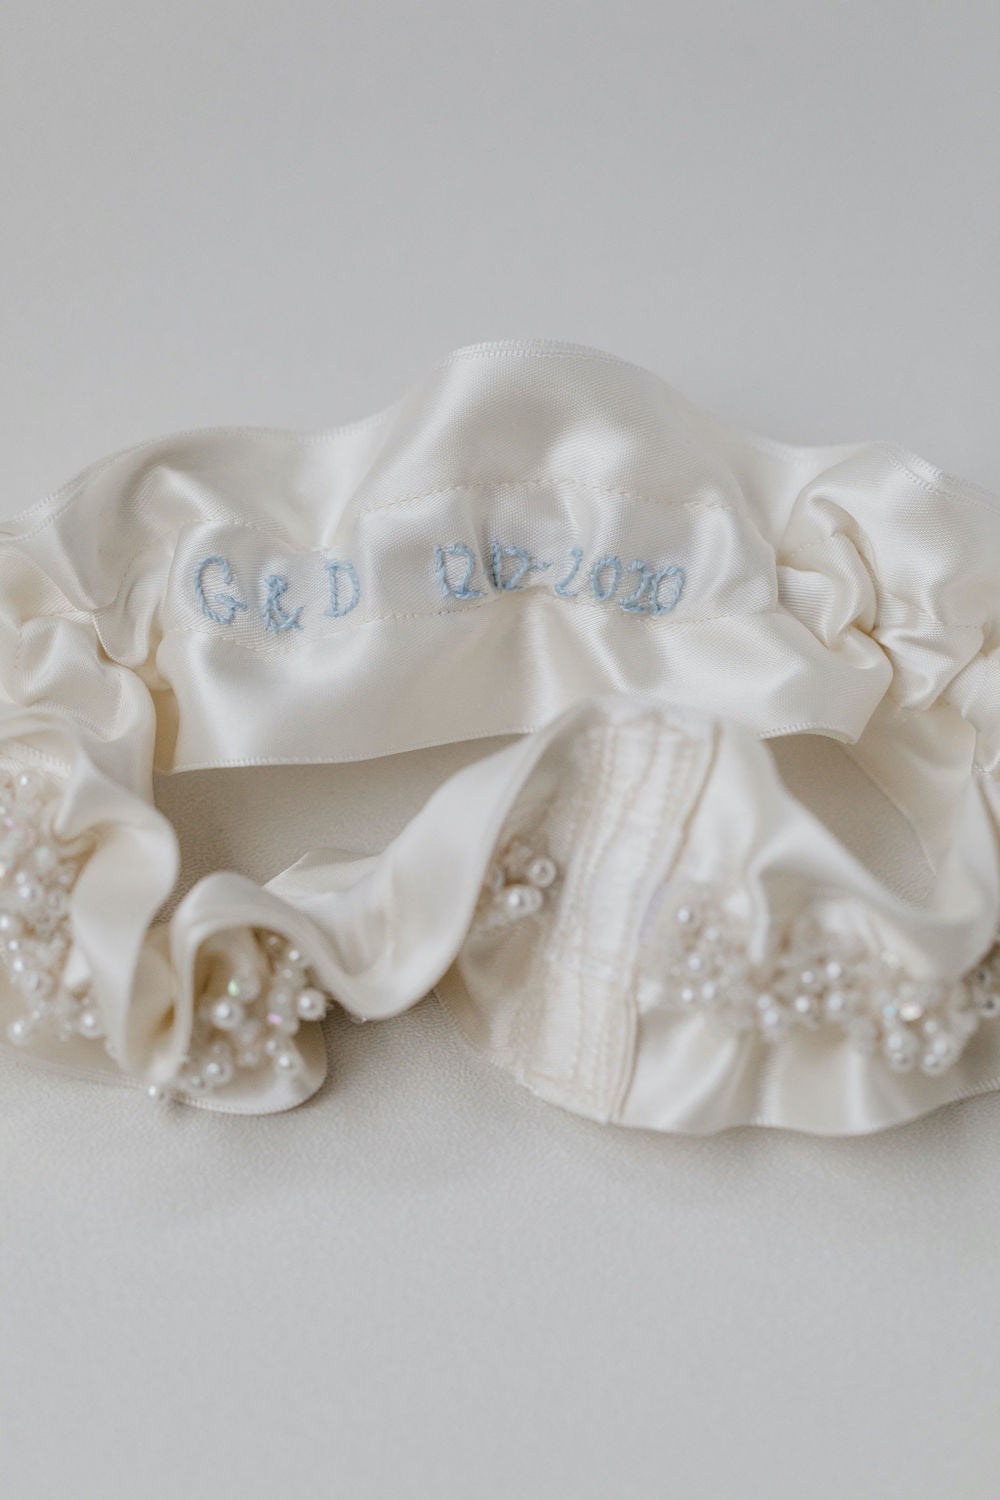 personalized wedding garter heirloom with crystals and sparkle by luxury garter designer, The Garter Girl